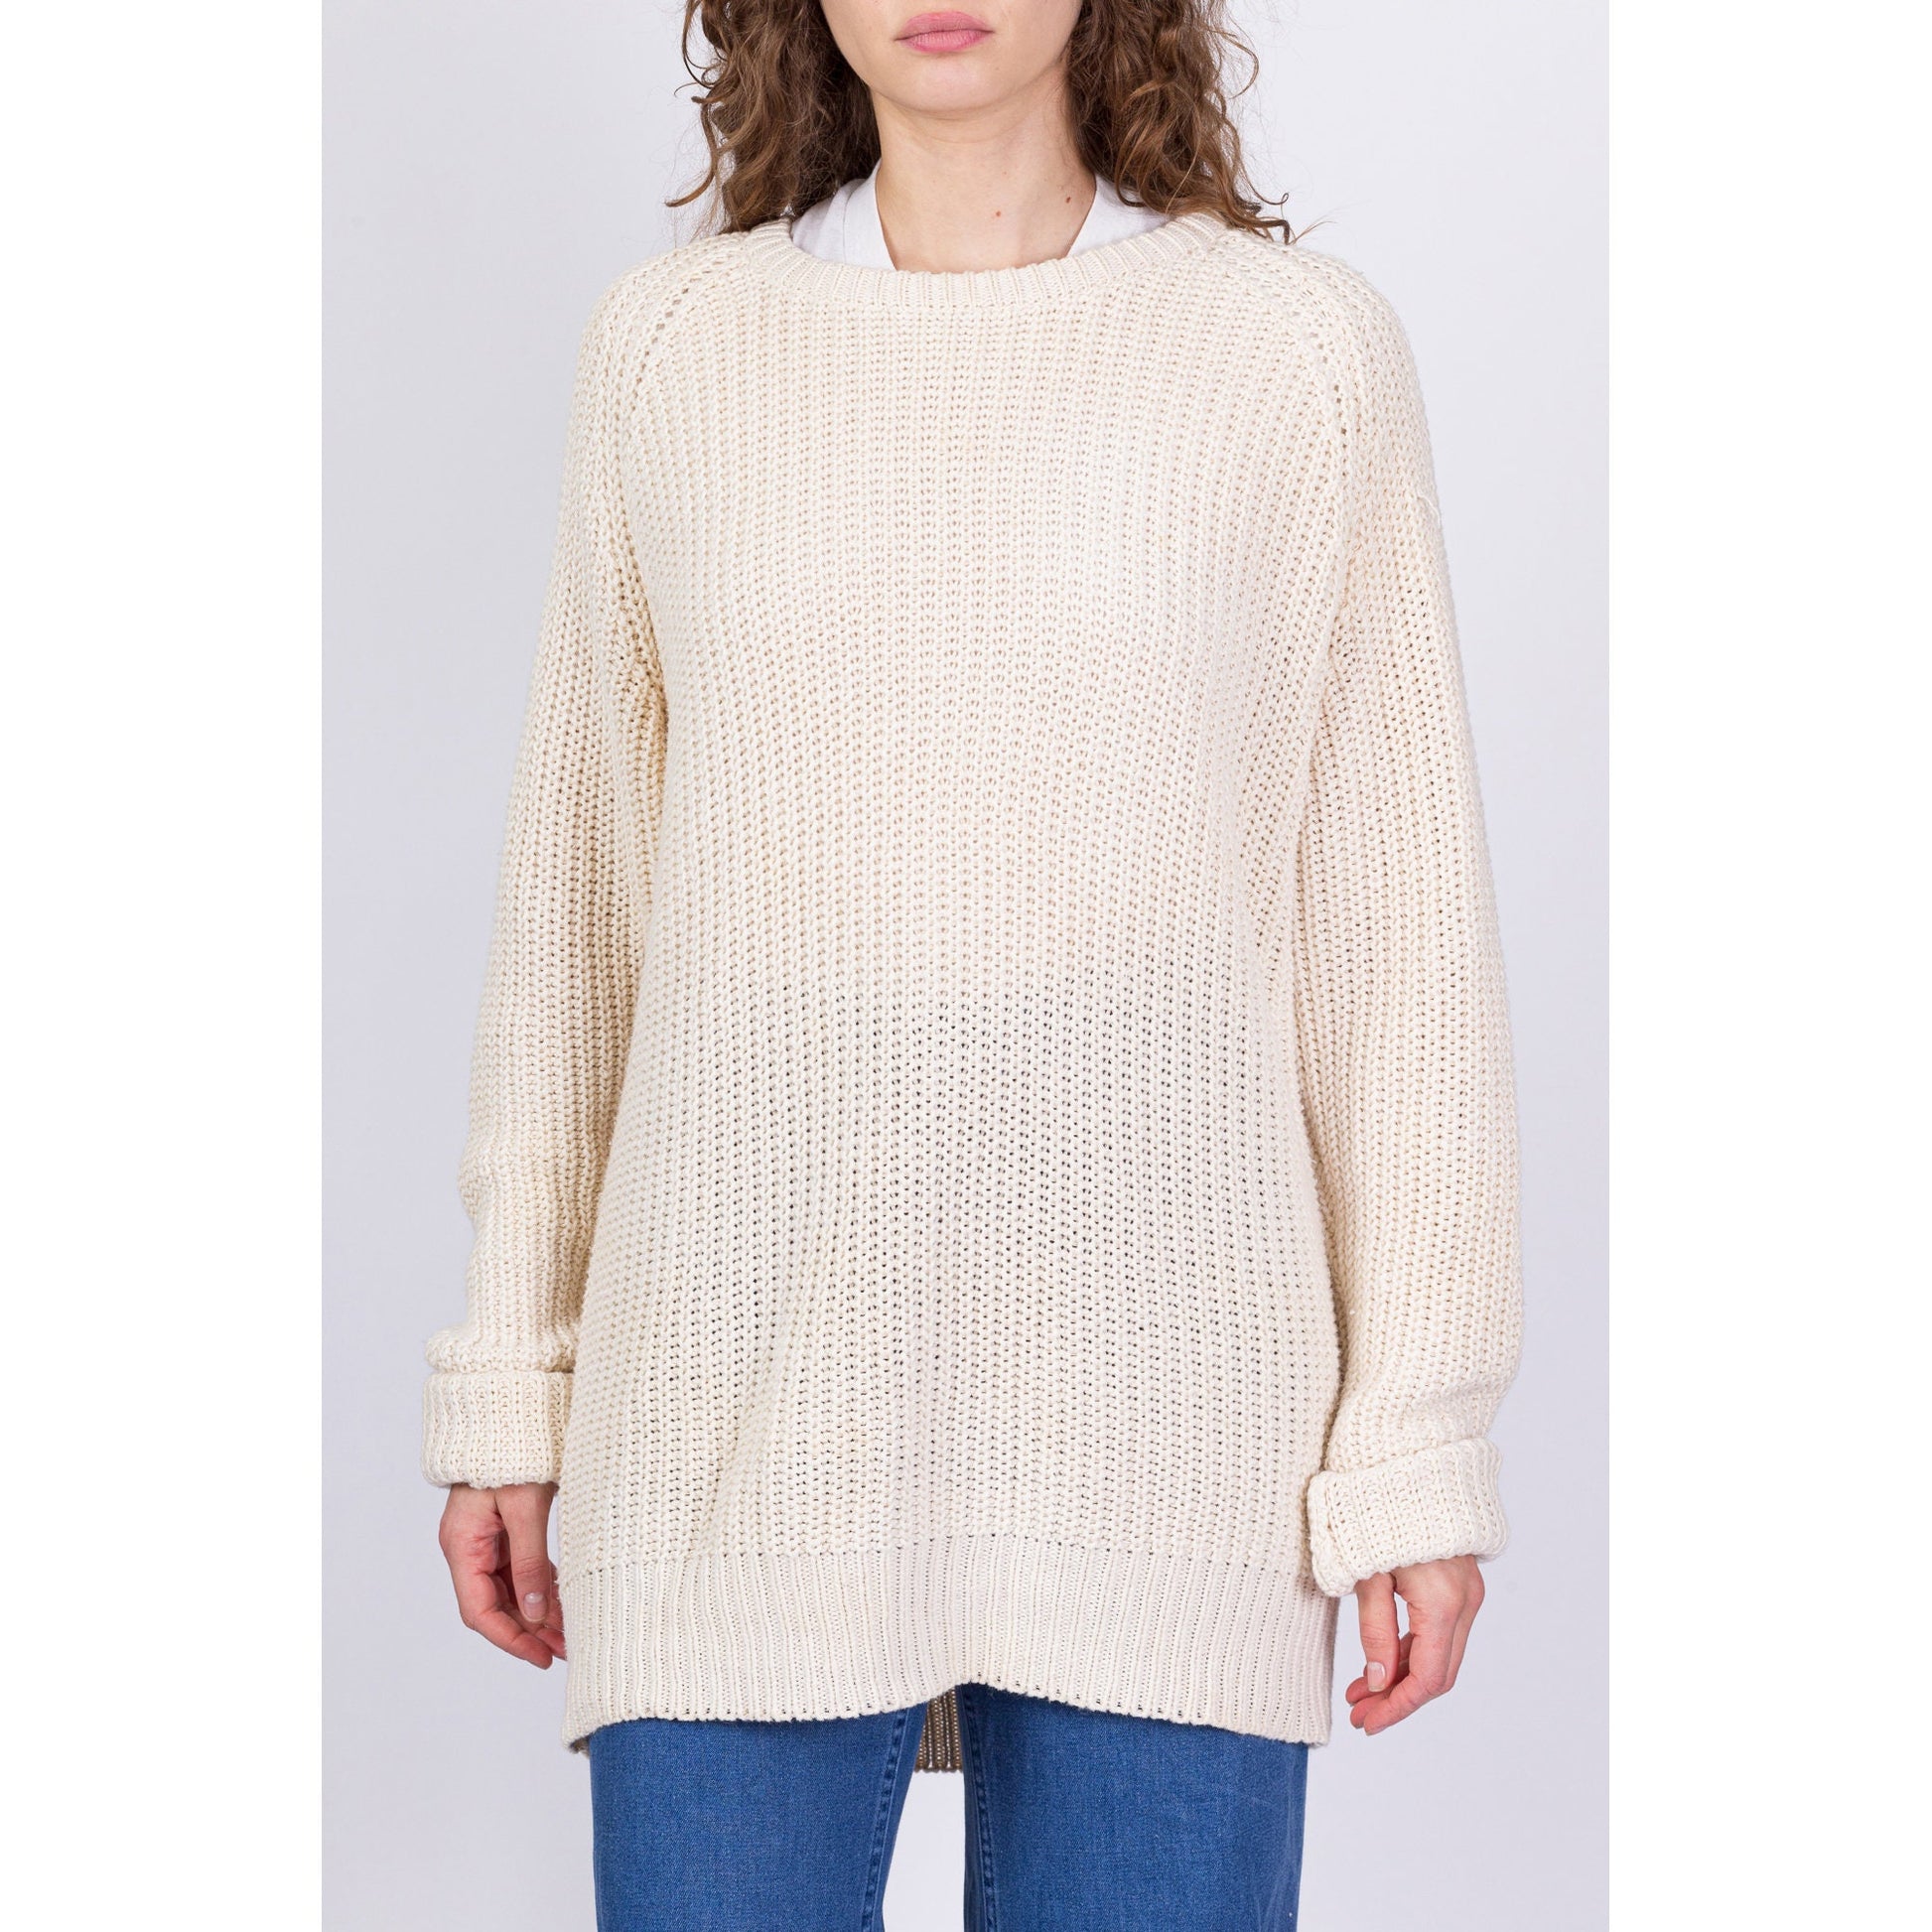 90s Cream Cotton Cable Knit Fisherman Sweater - Men's Large, Women's XL 